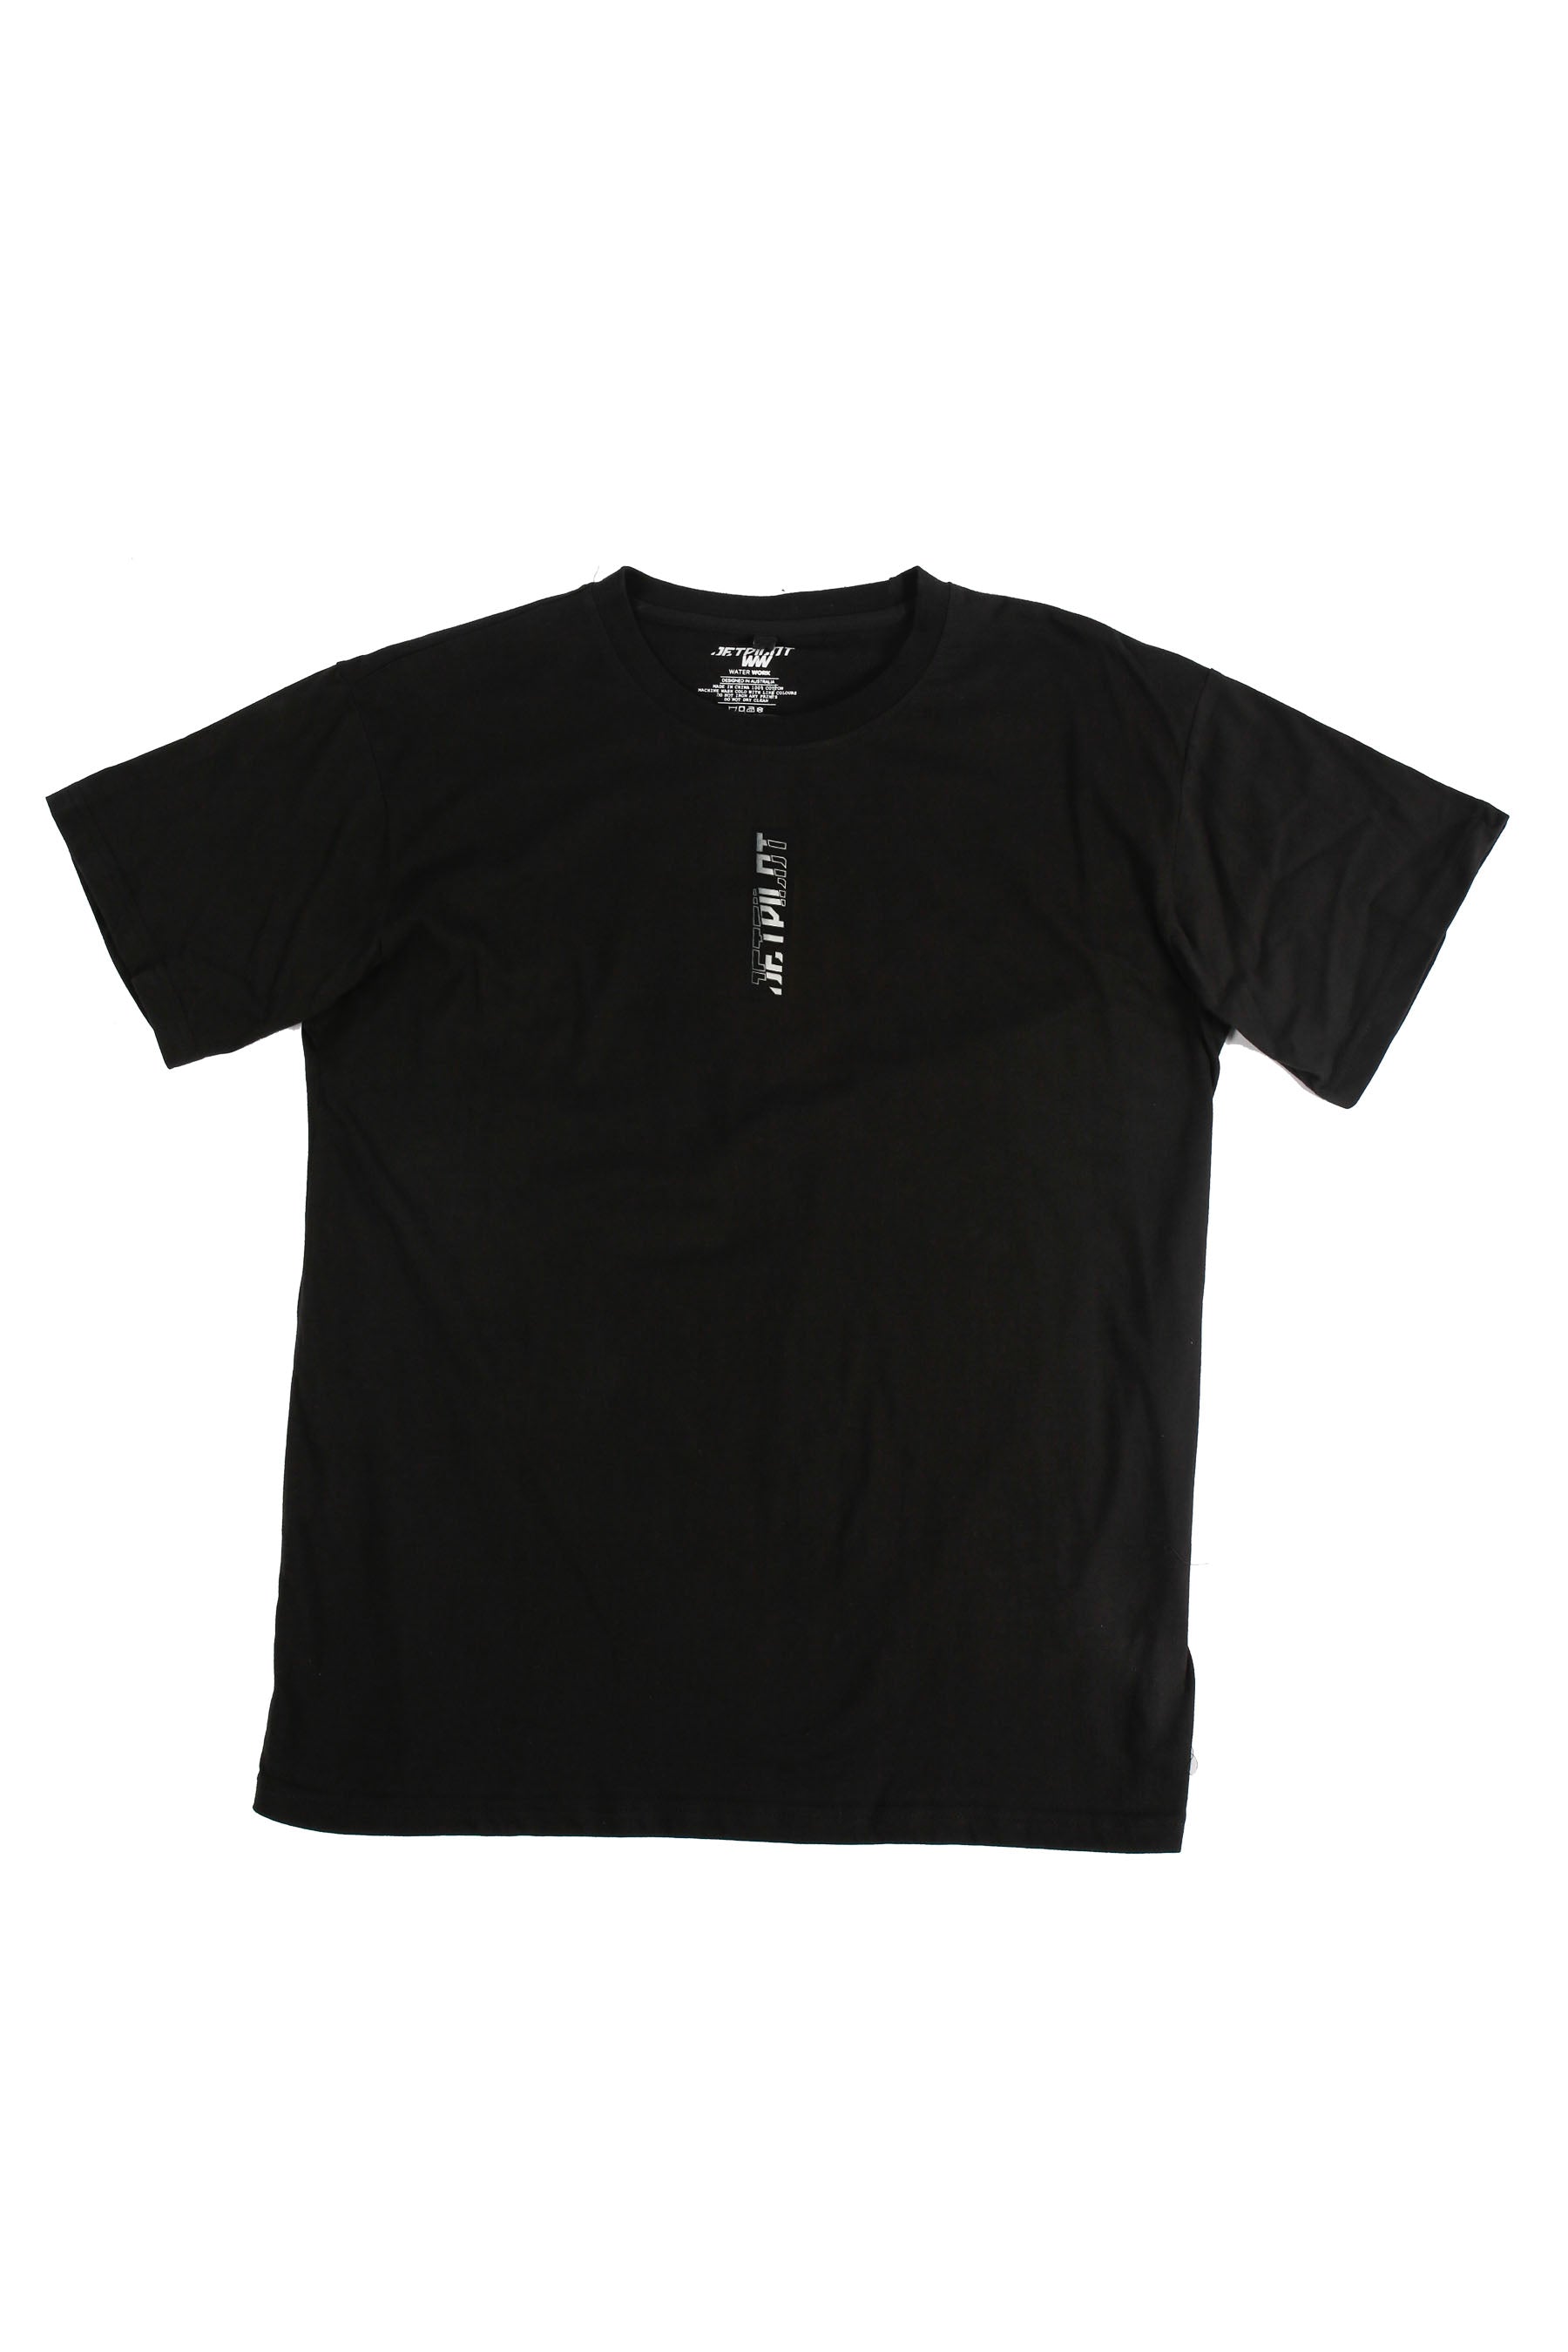 Jetpilot Super Splice Youth S/S T-Shirt - Black/Charcoal